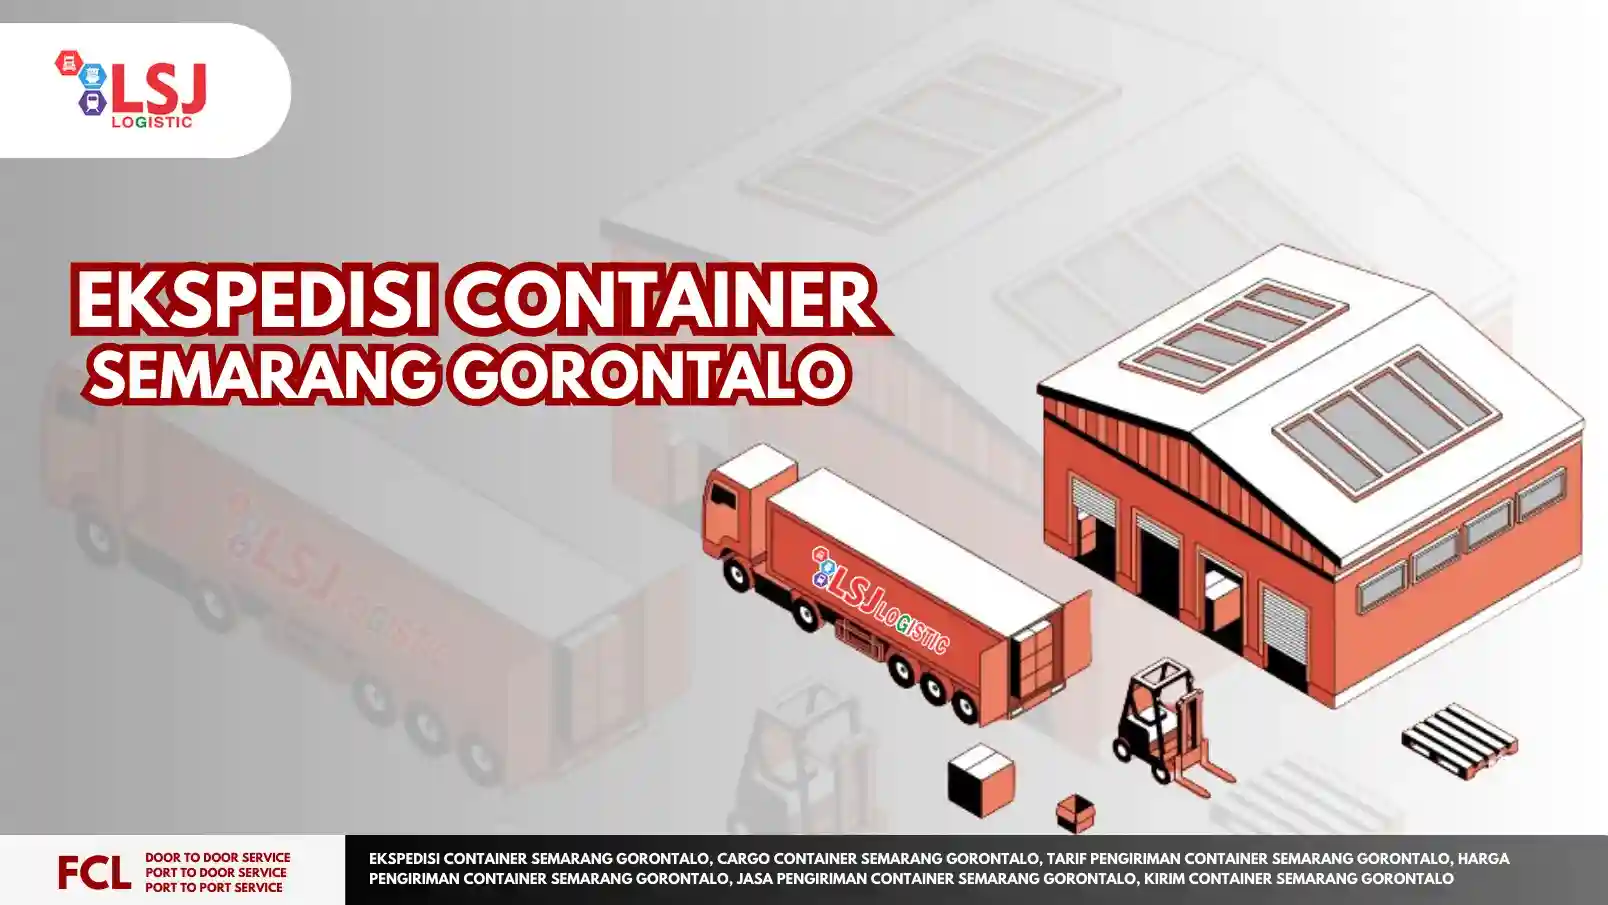 Ekspedisi Container Semarang Gorontalo